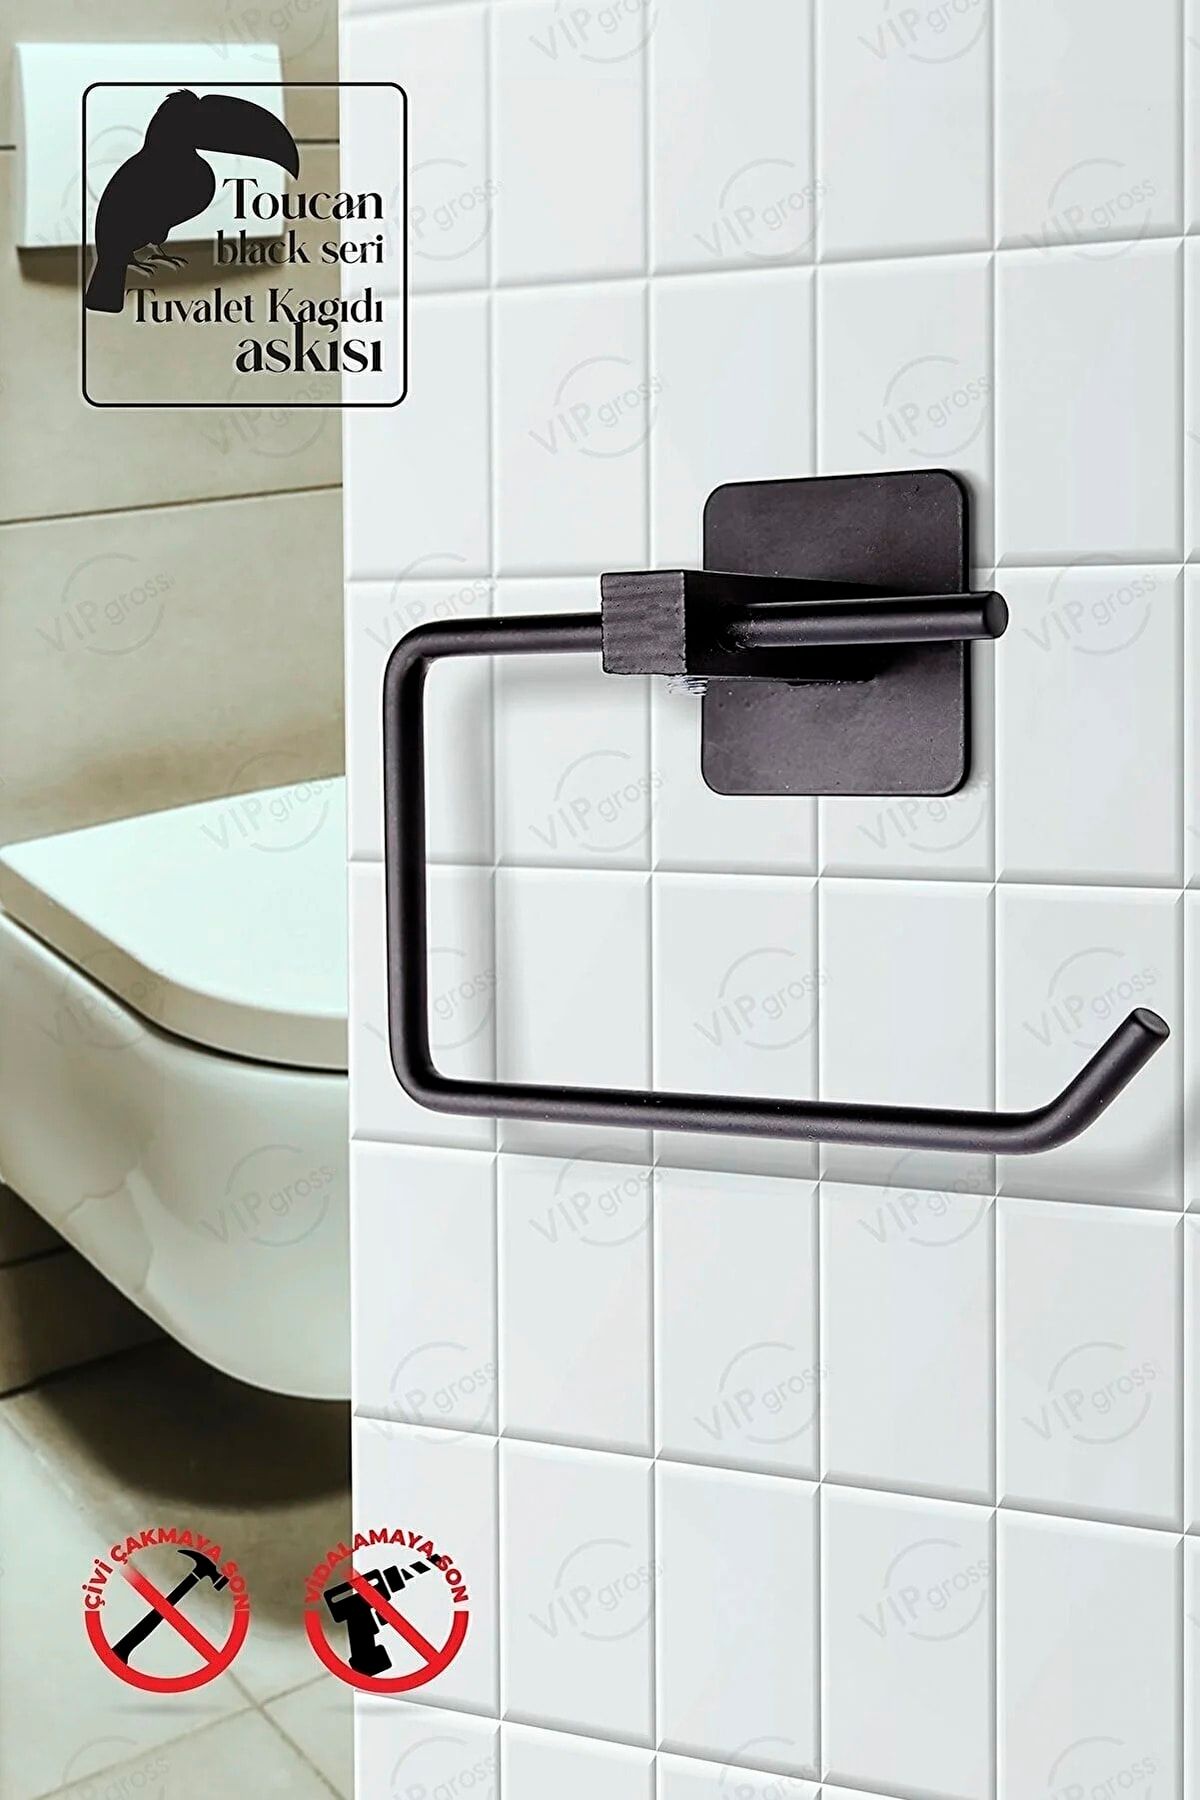 vipgross Siyah Banyo Duvara Monte Tuvalet Kağıdı Tutacağı/tuvalet Kağıtlık